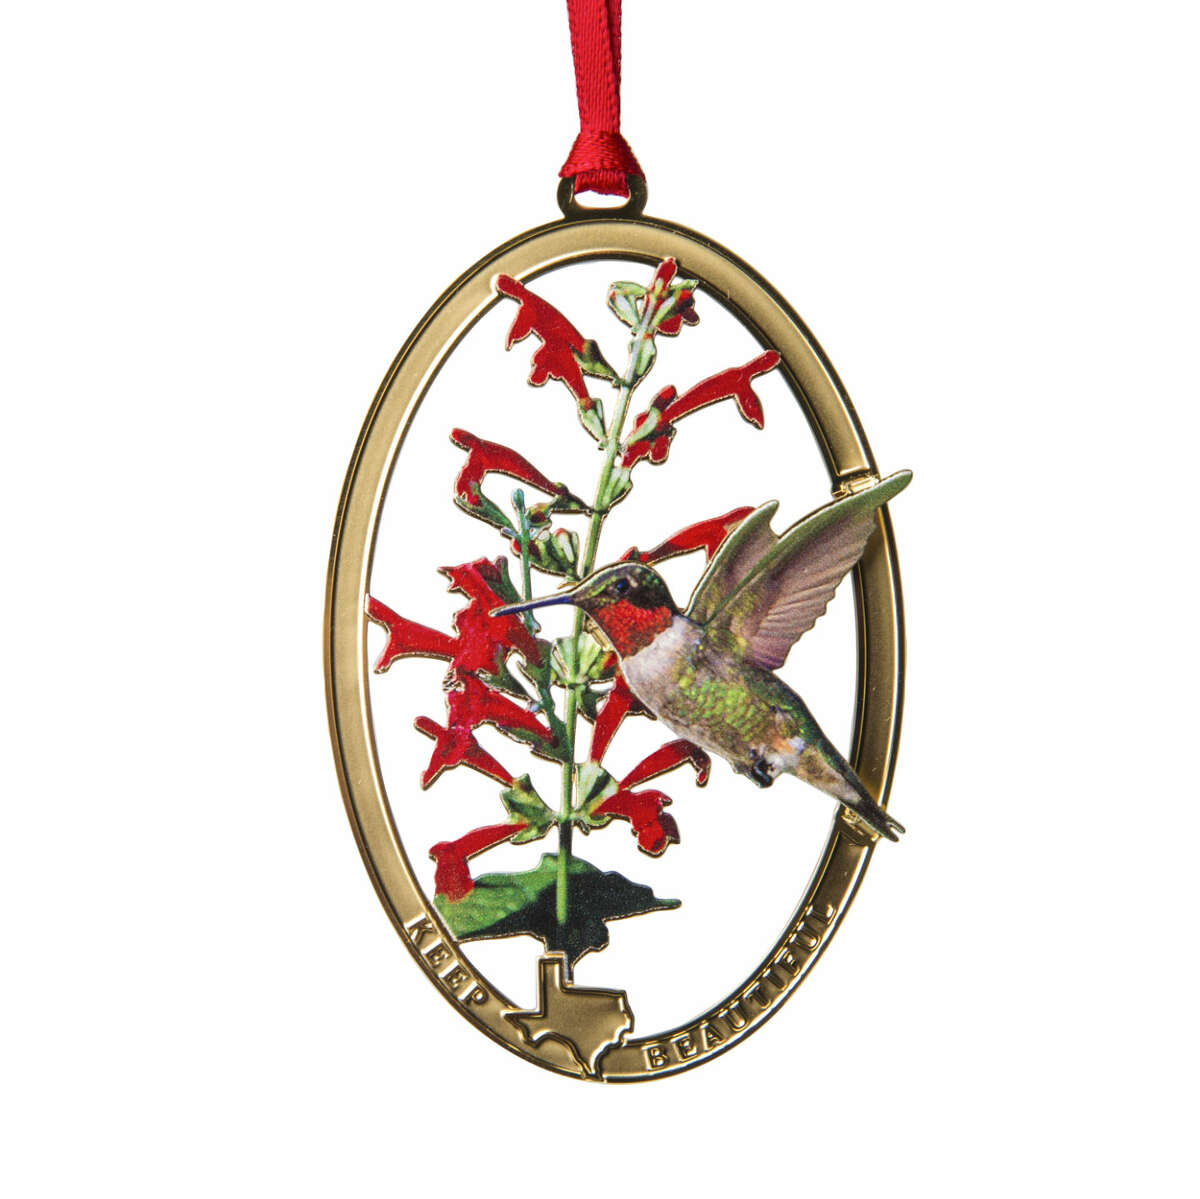 2014 Keep Texas Beautiful ornament released